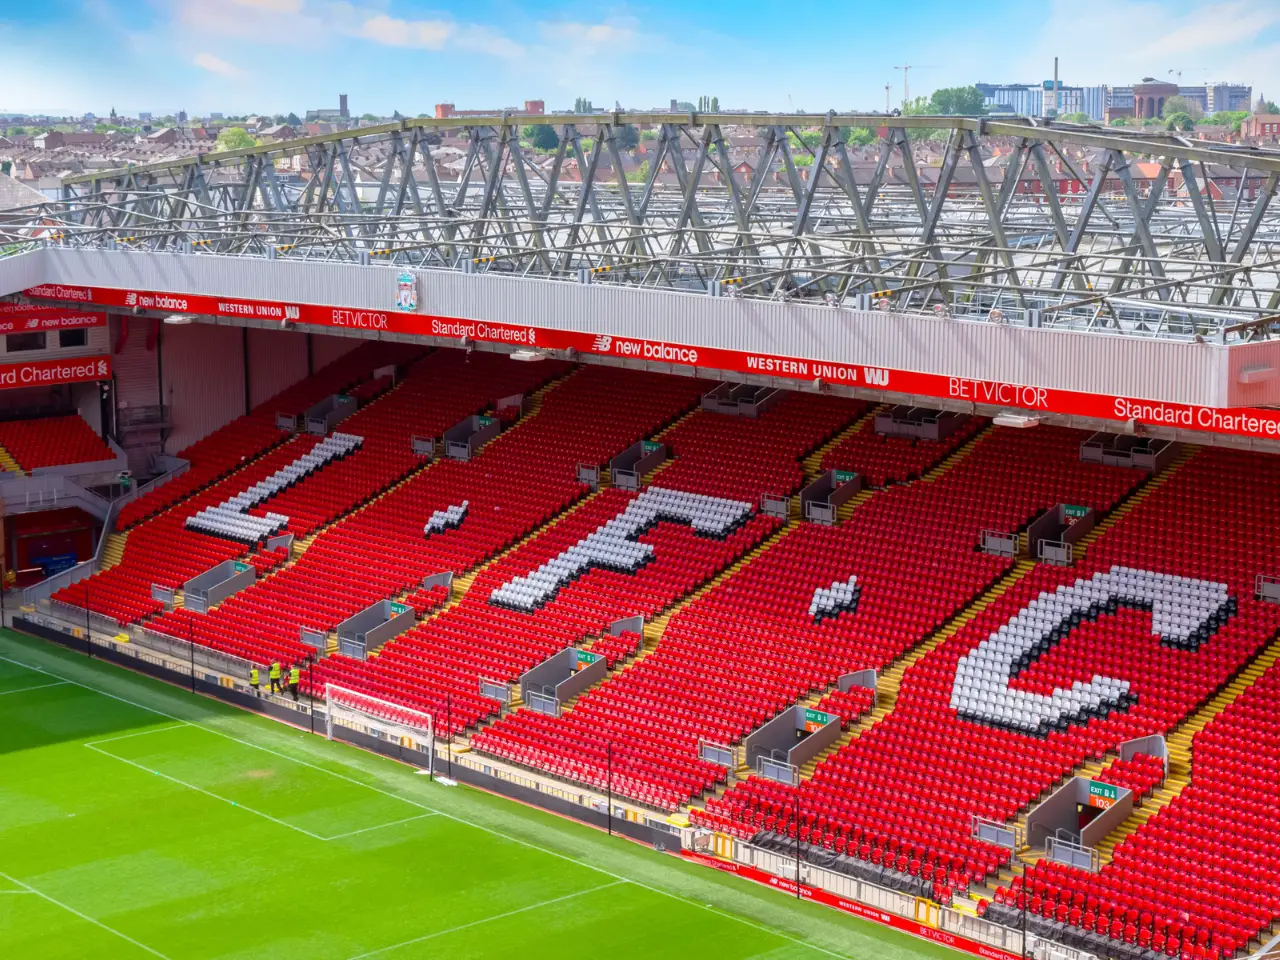 Anfield, Liverpool Football Club stadium